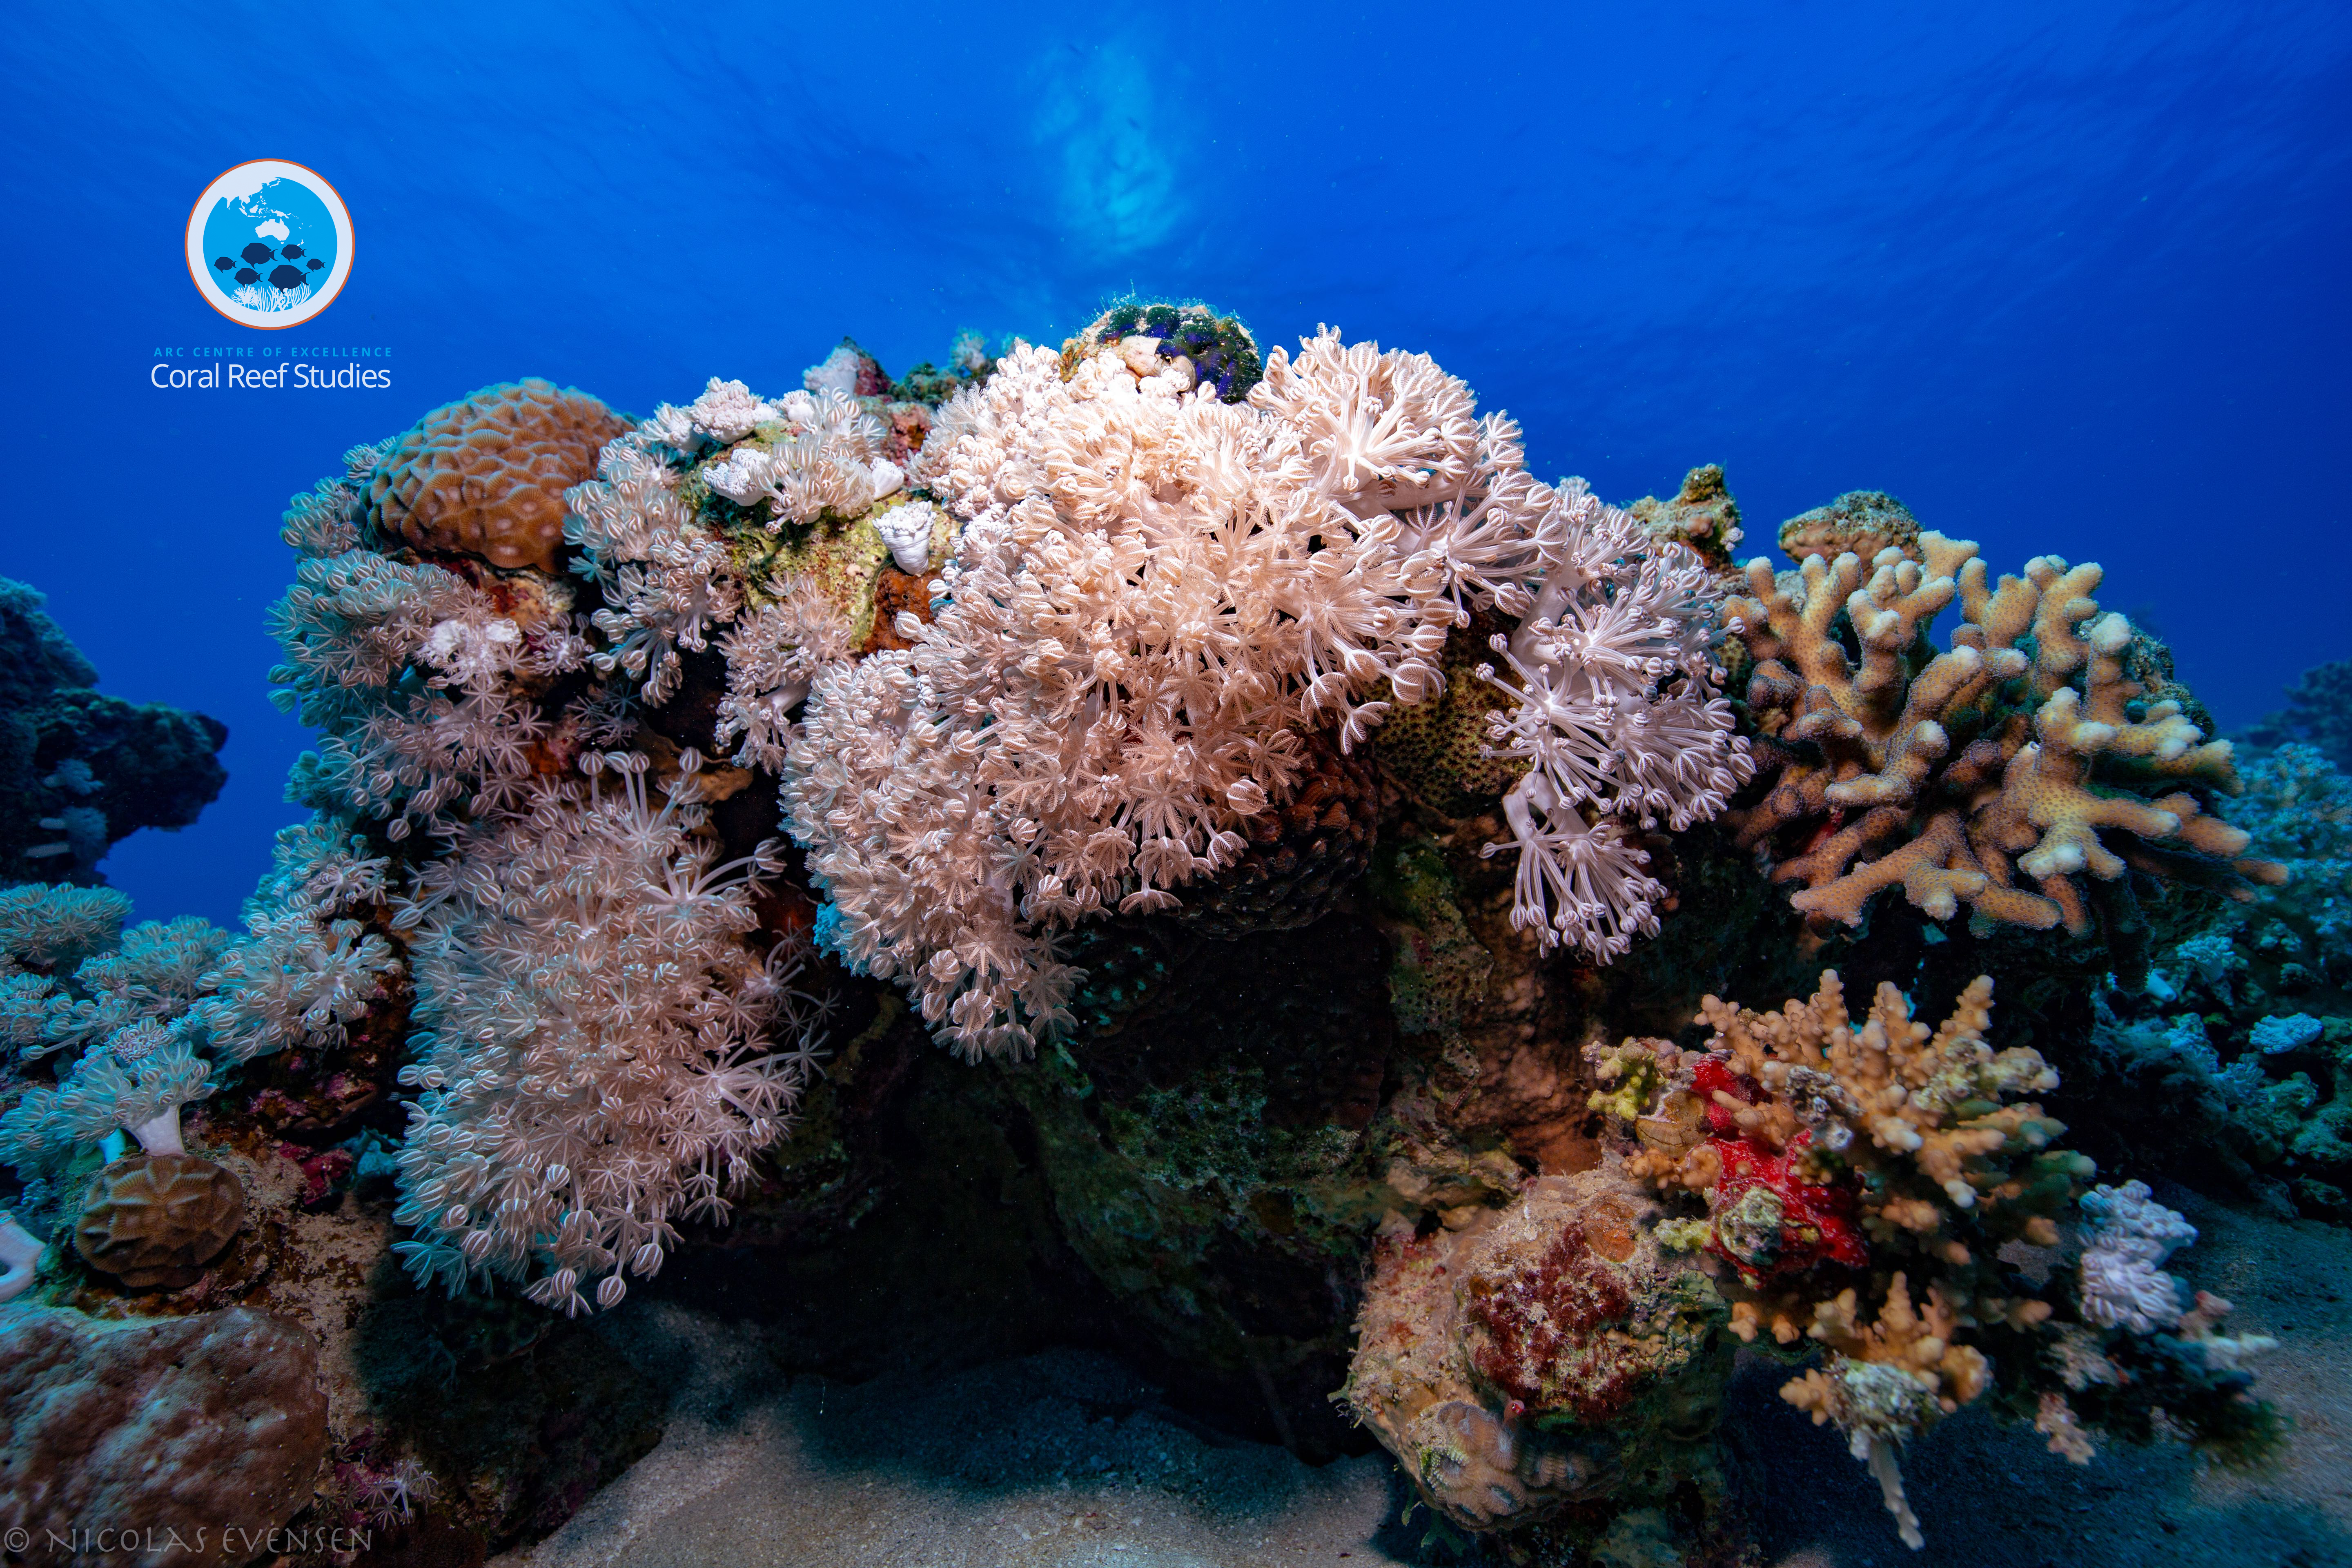 Concerns as development threatens reefs